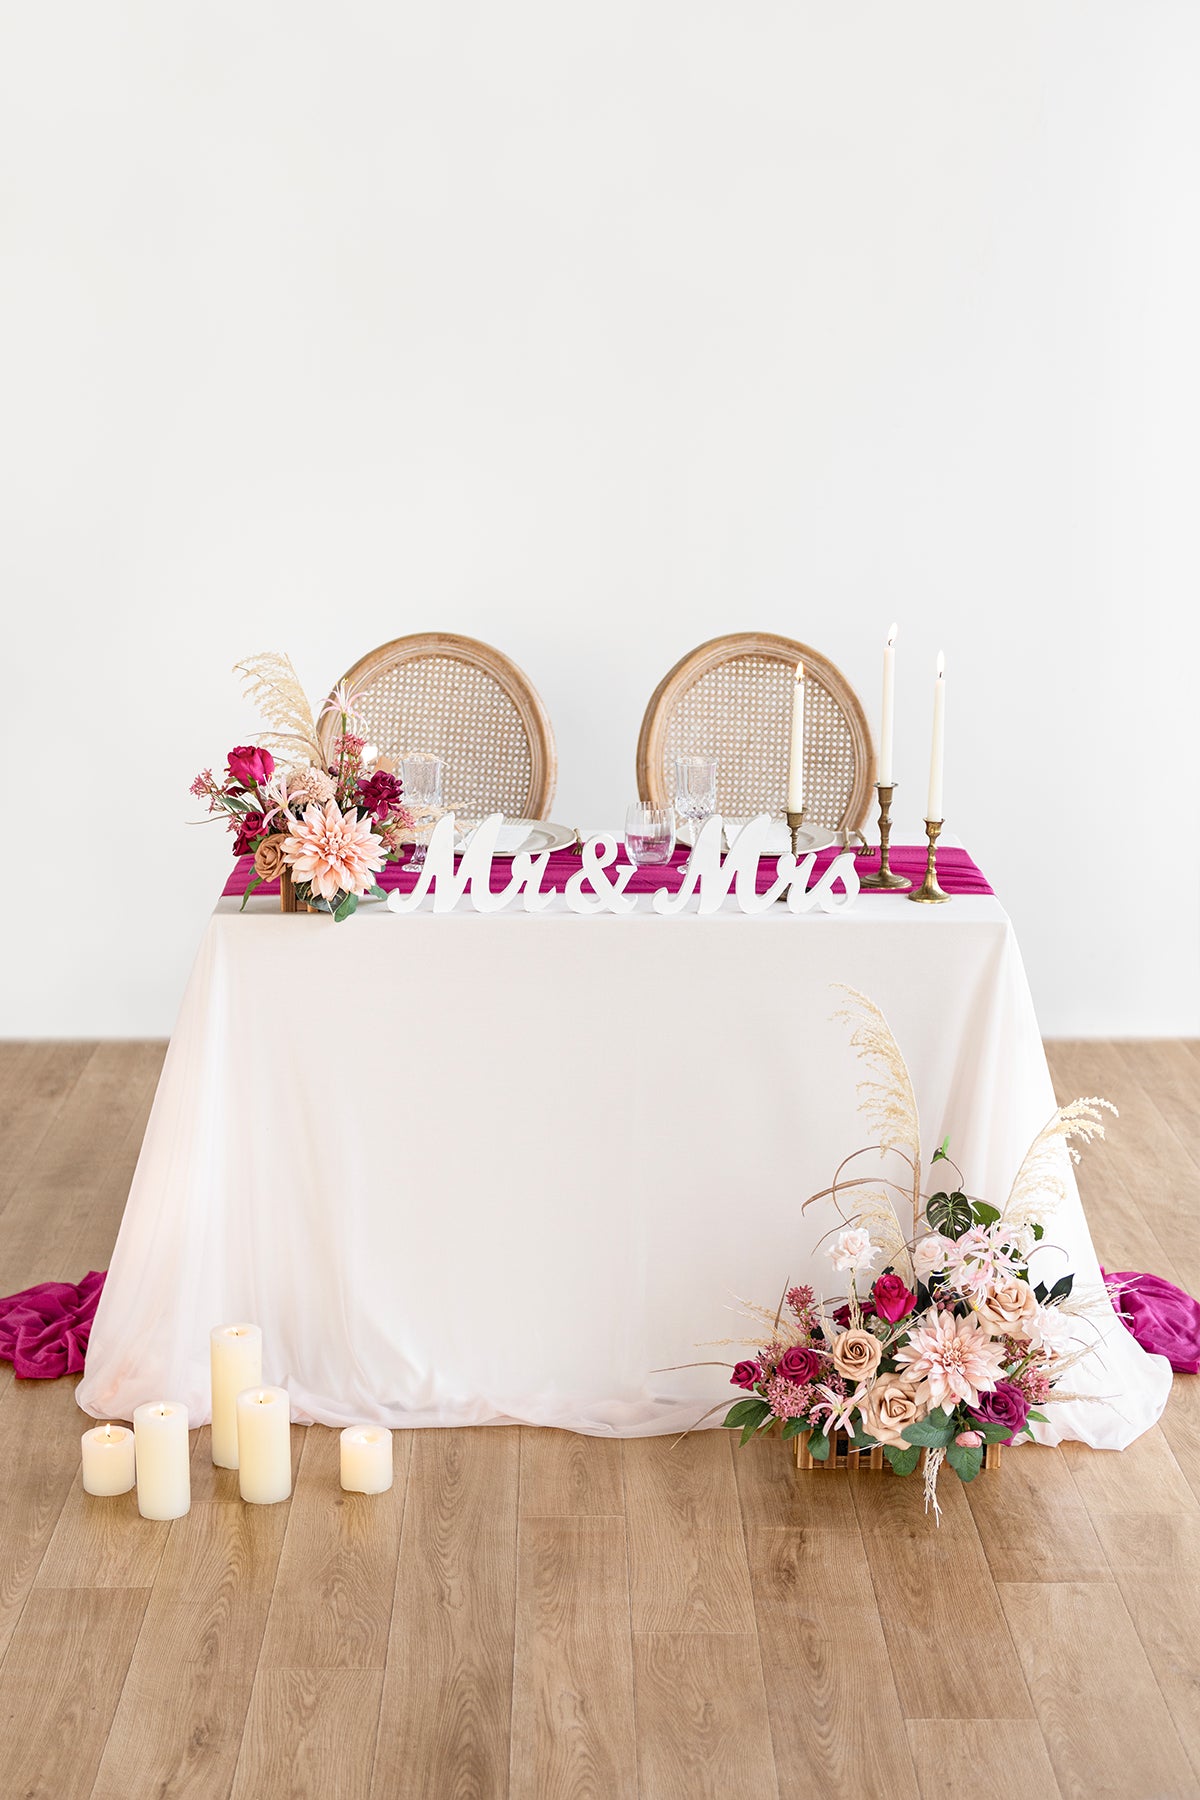 Flower Arrangement Set for Table in Valentine Magenta